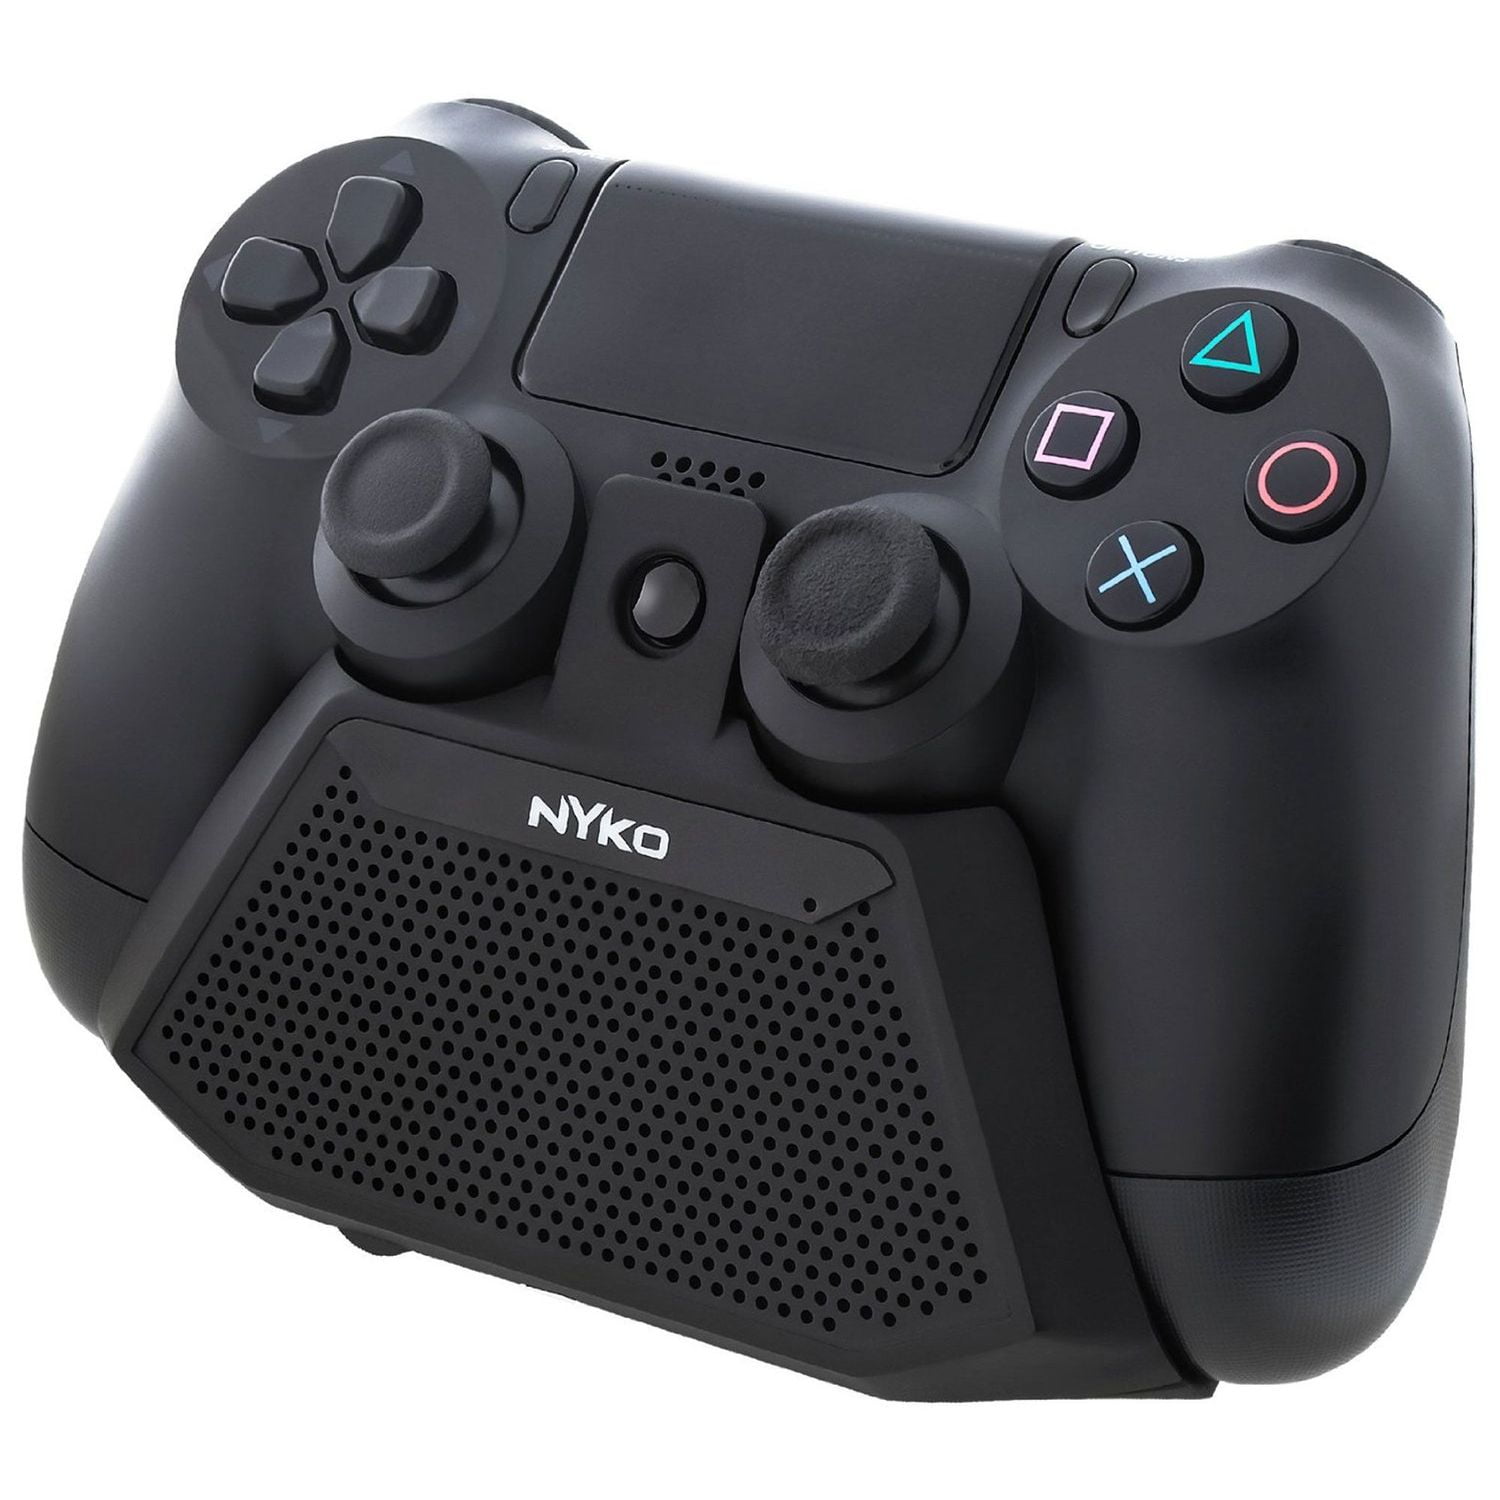 Svare vejr stamme Nyko SpeakerCom Speaker Microphone for PlayStation 4 (Controller not  included), Black - Walmart.com